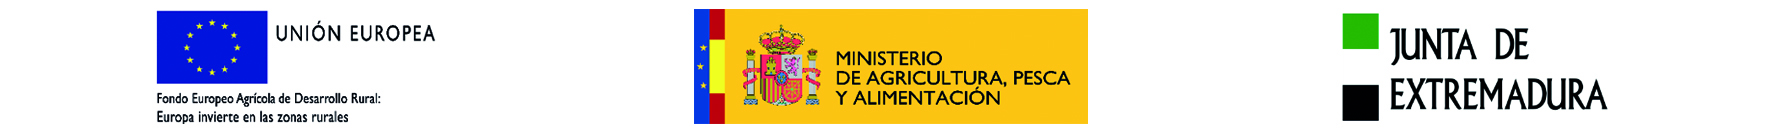 LOGO UNION EUROPEA - MINISTERIO DE AGRICULTURA, PESCA Y ALIMENTACION - JUNTA DE EXTREMADURA